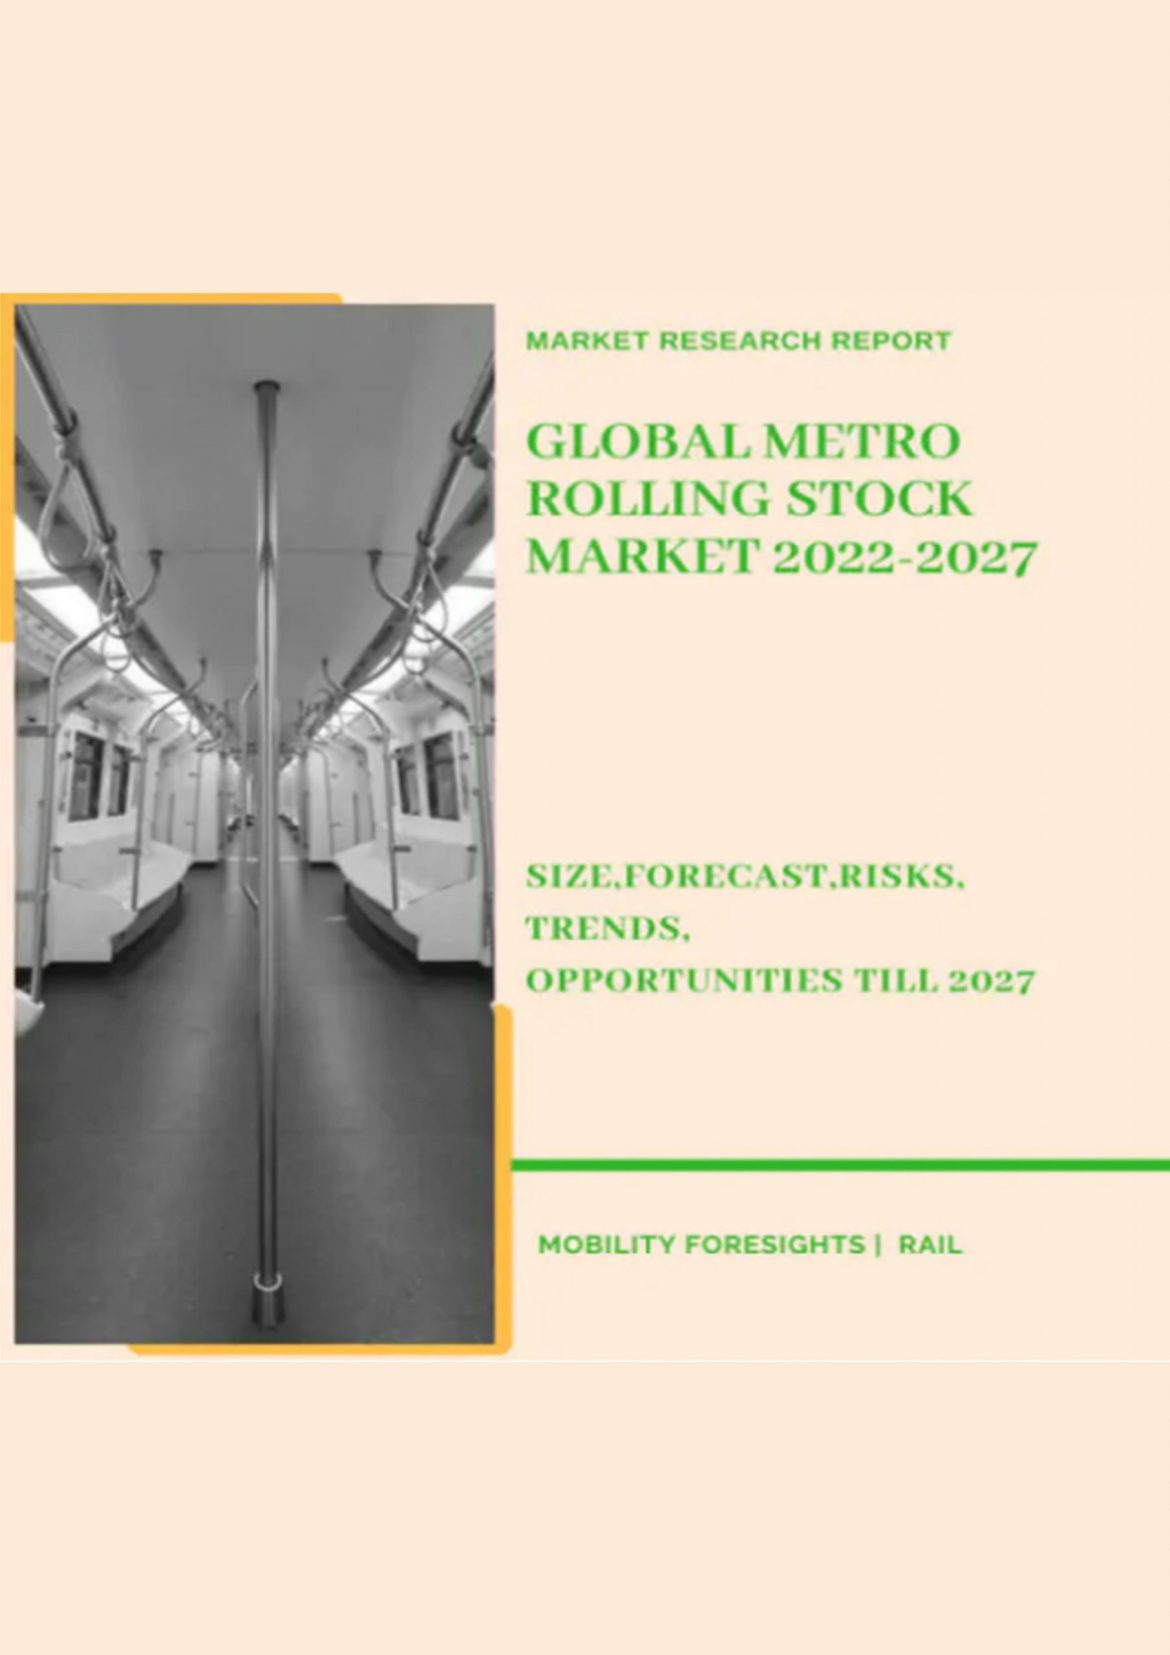 Global Metro rolling stock market 2022-2027